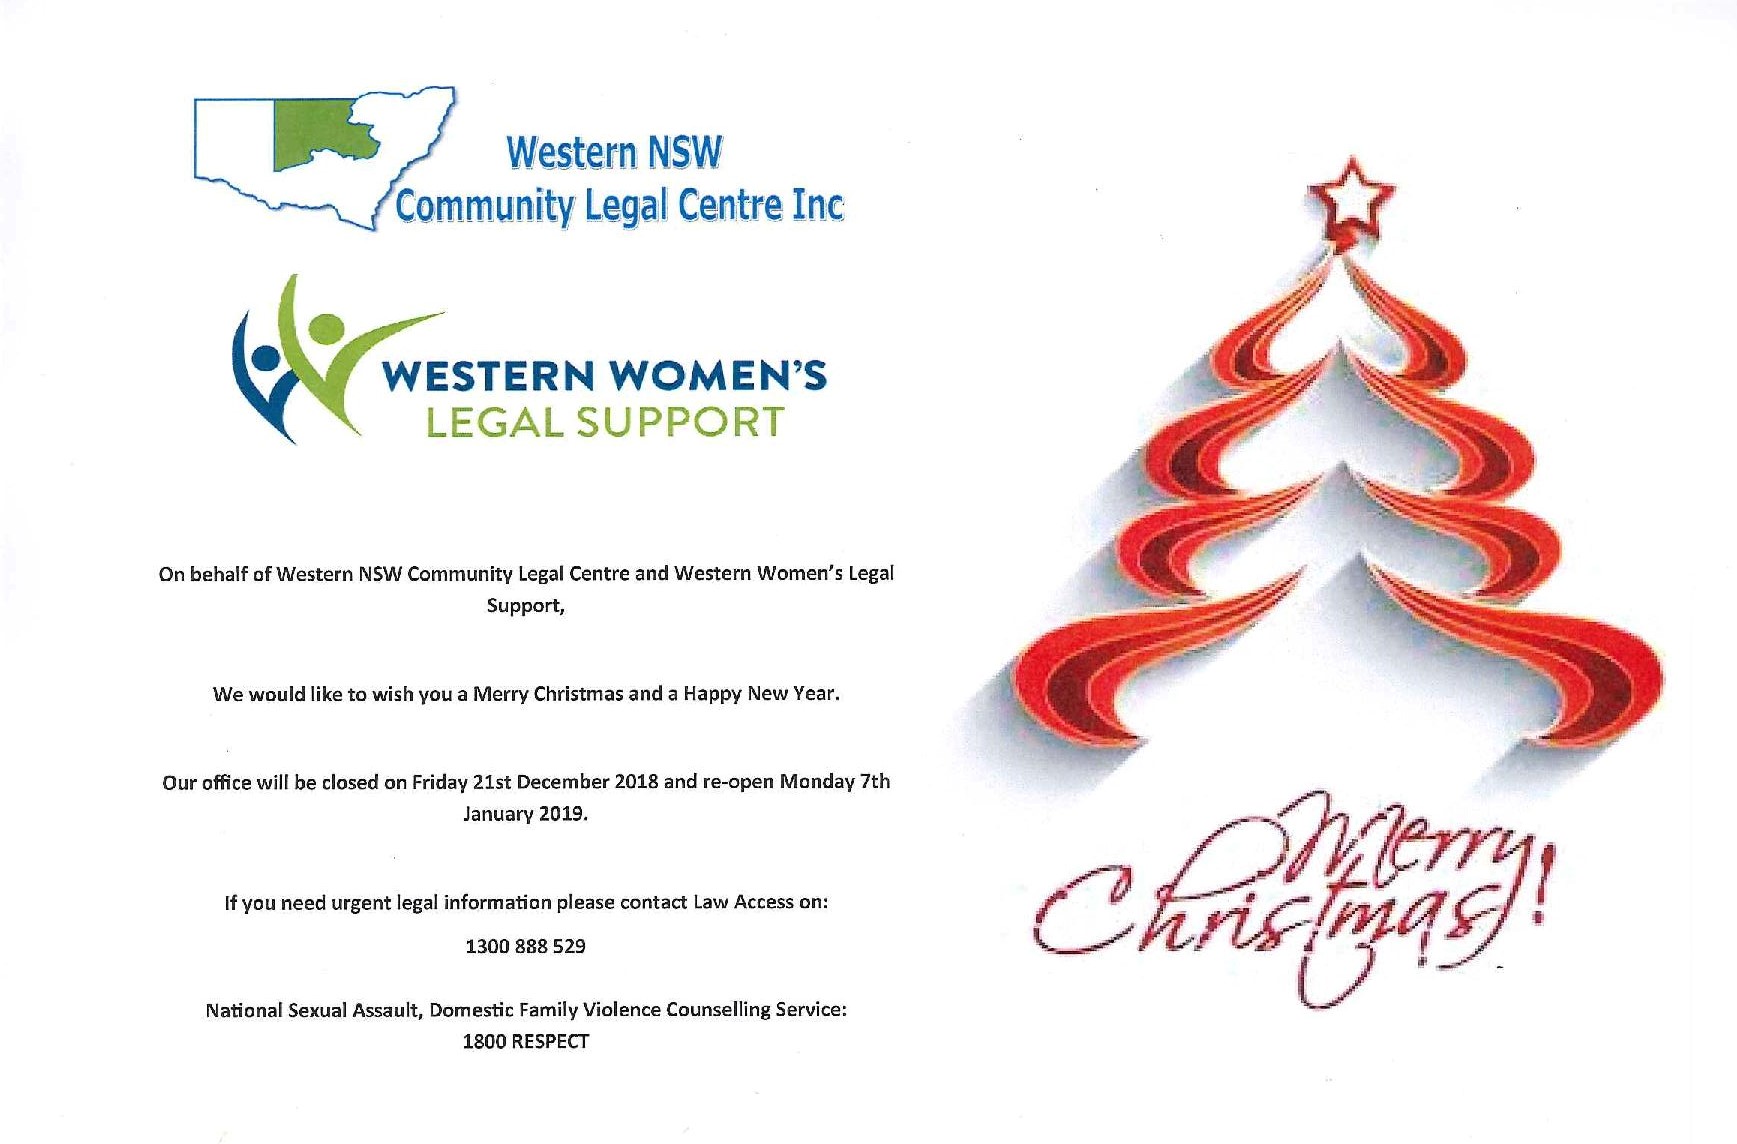 Western NSW Community Legal Centre